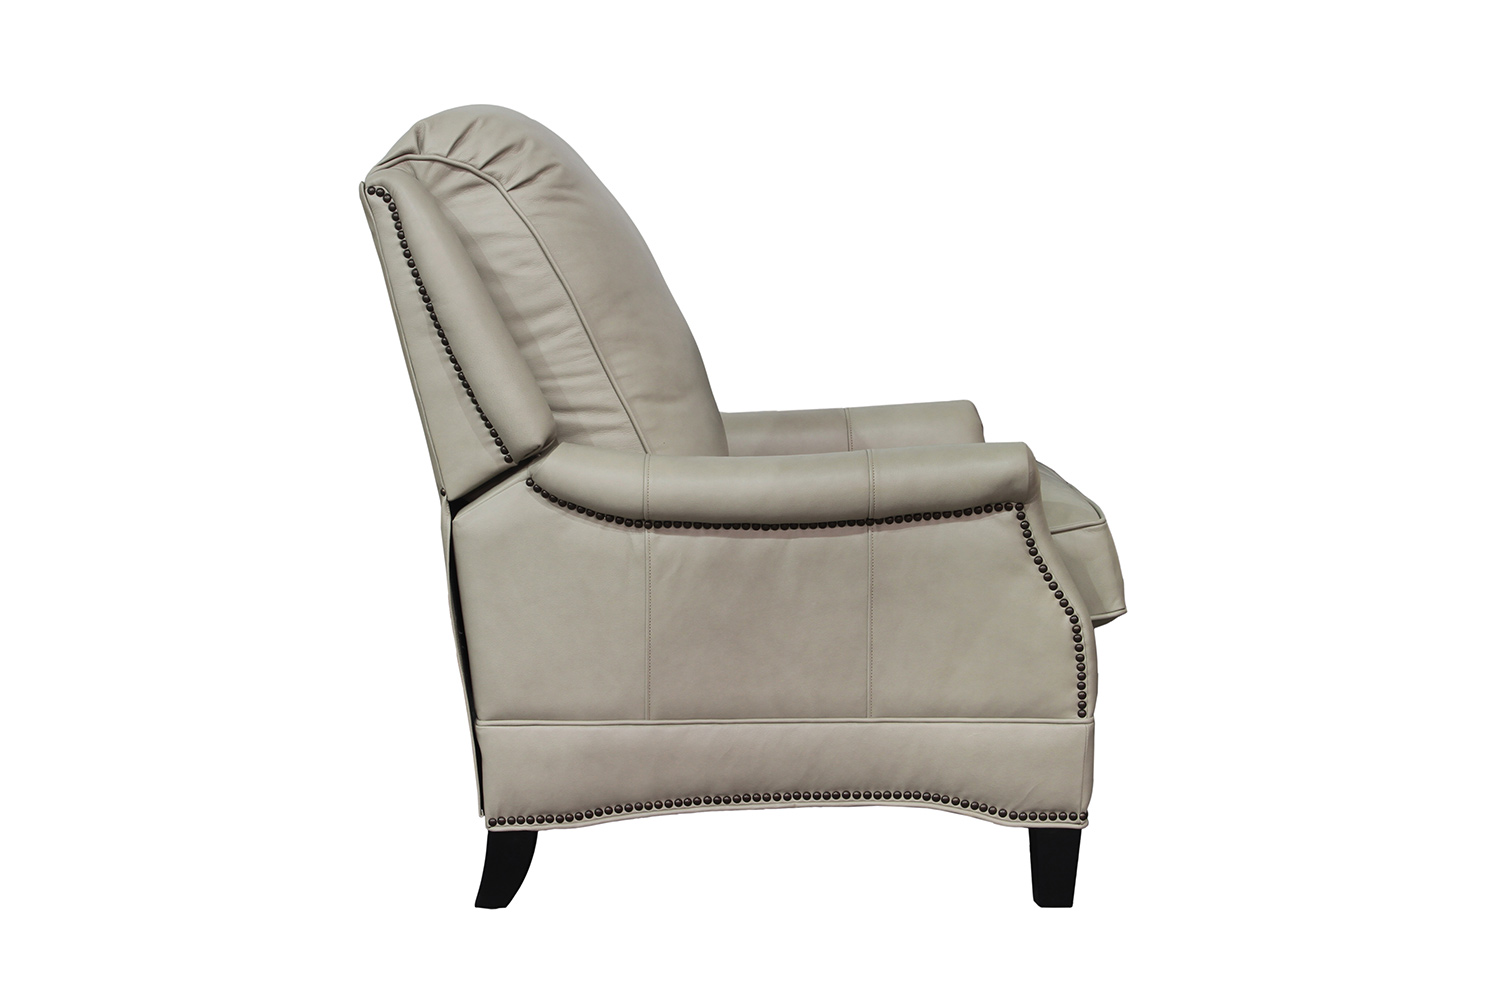 Barcalounger Ashebrooke Recliner Chair - Shoreham Cream/All Leather